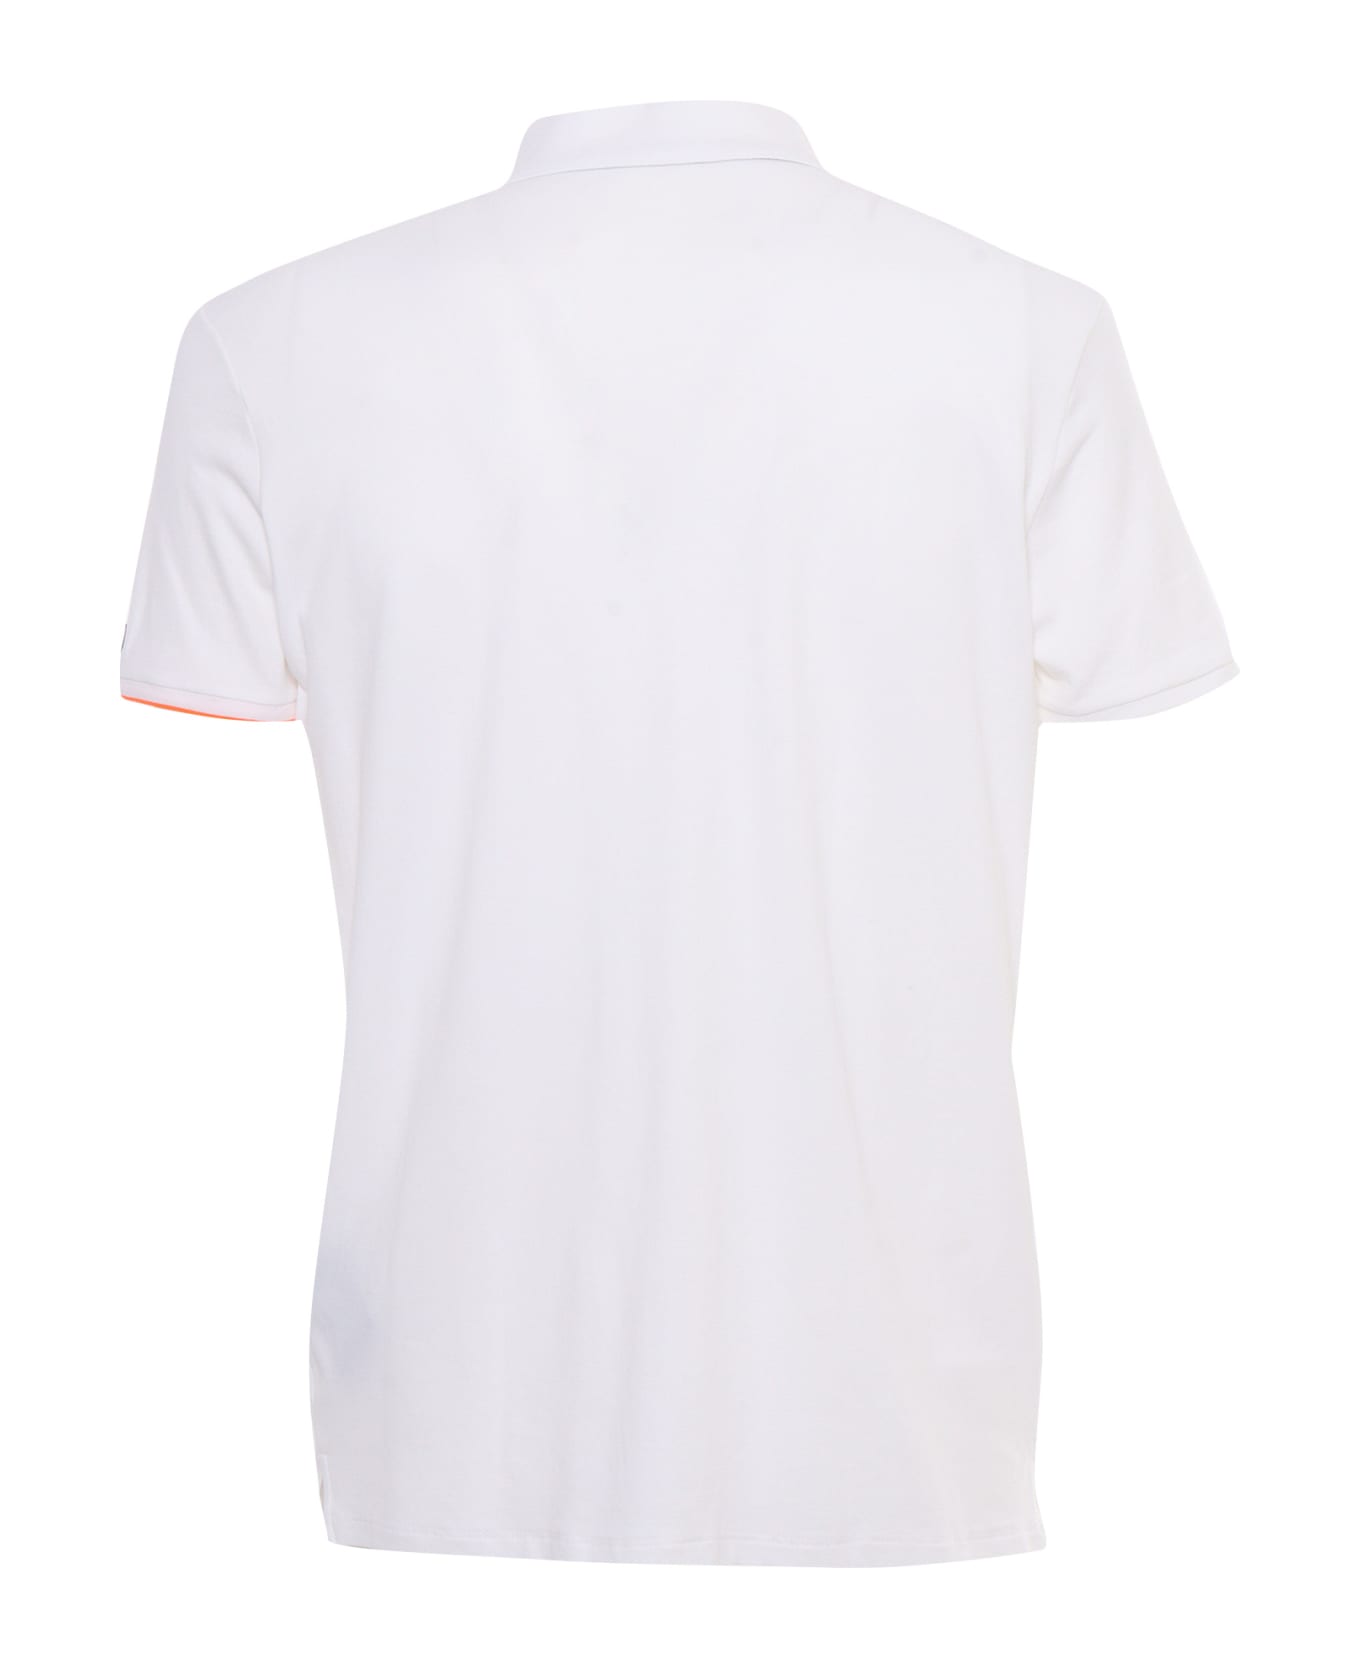 RRD - Roberto Ricci Design White Polo - WHITE ポロシャツ